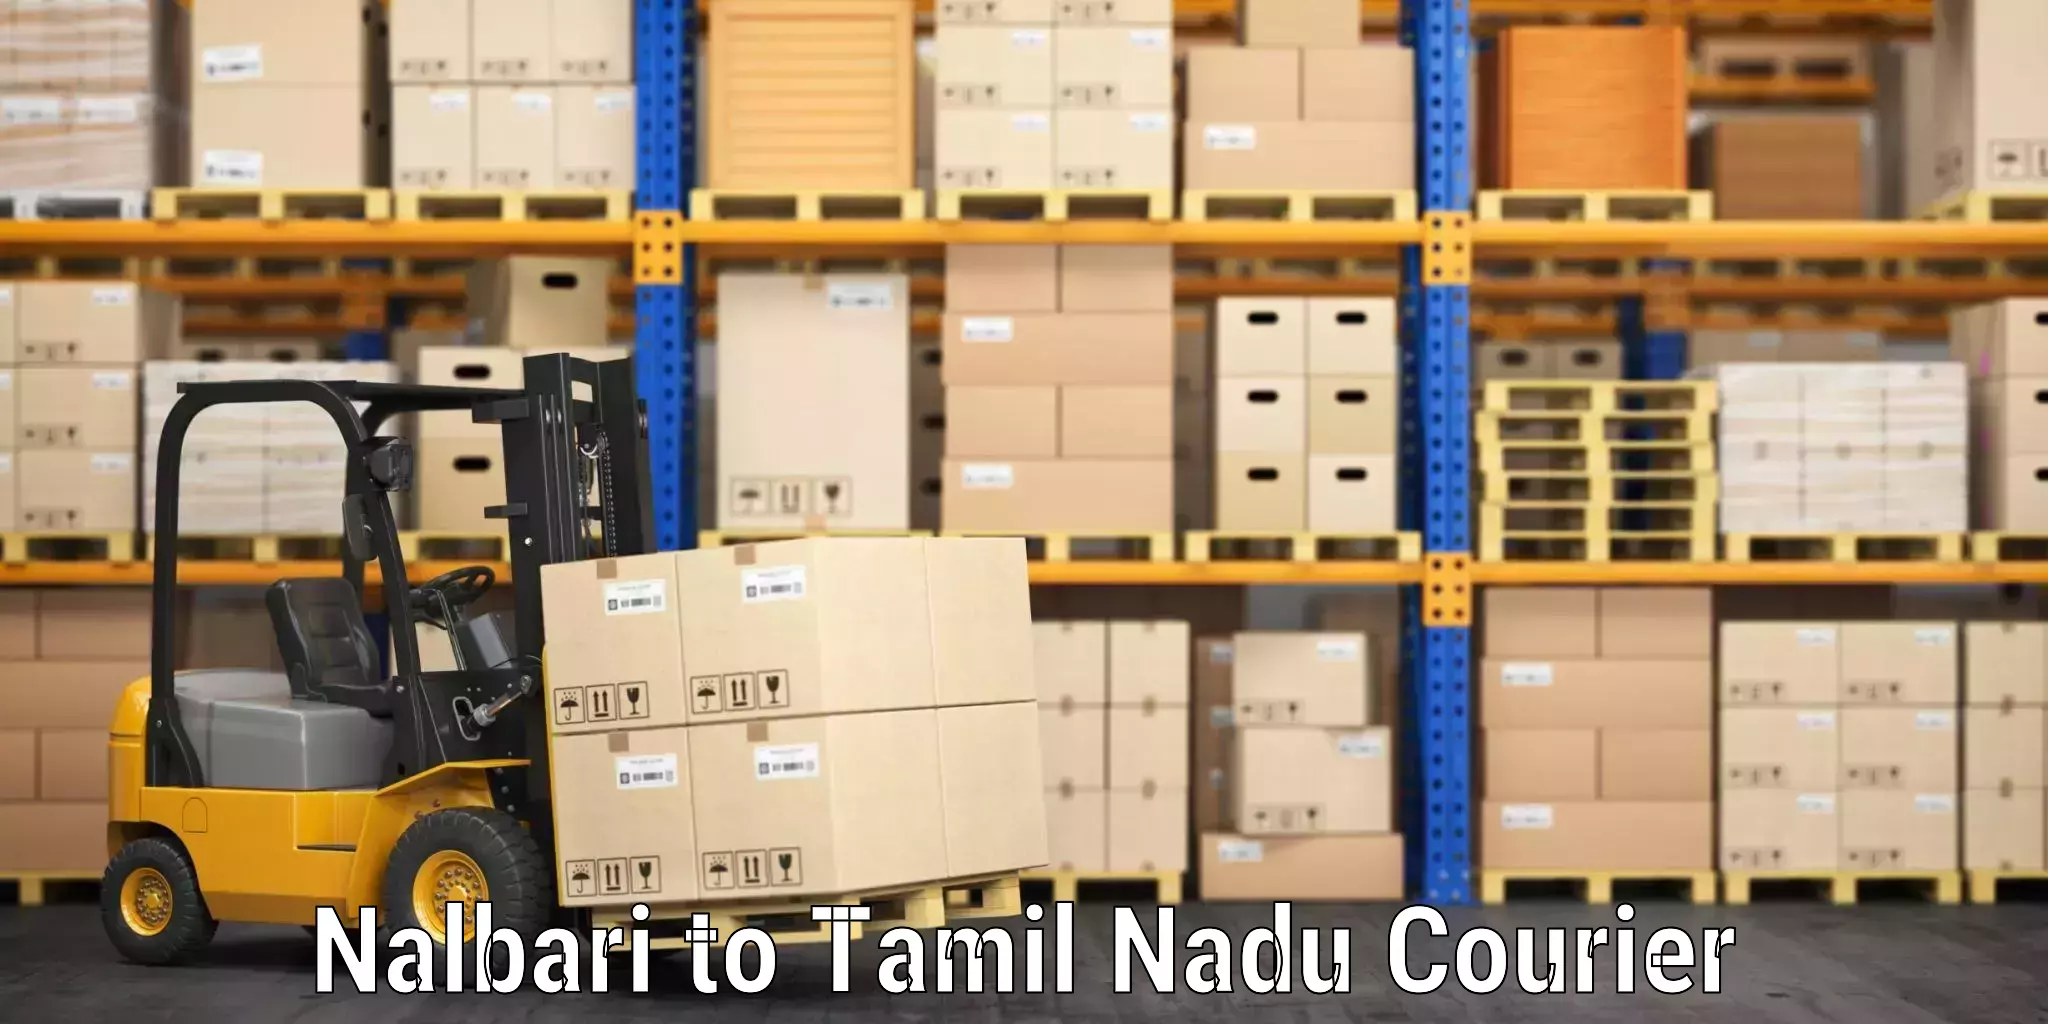 Luggage shipment specialists Nalbari to Tamil Nadu